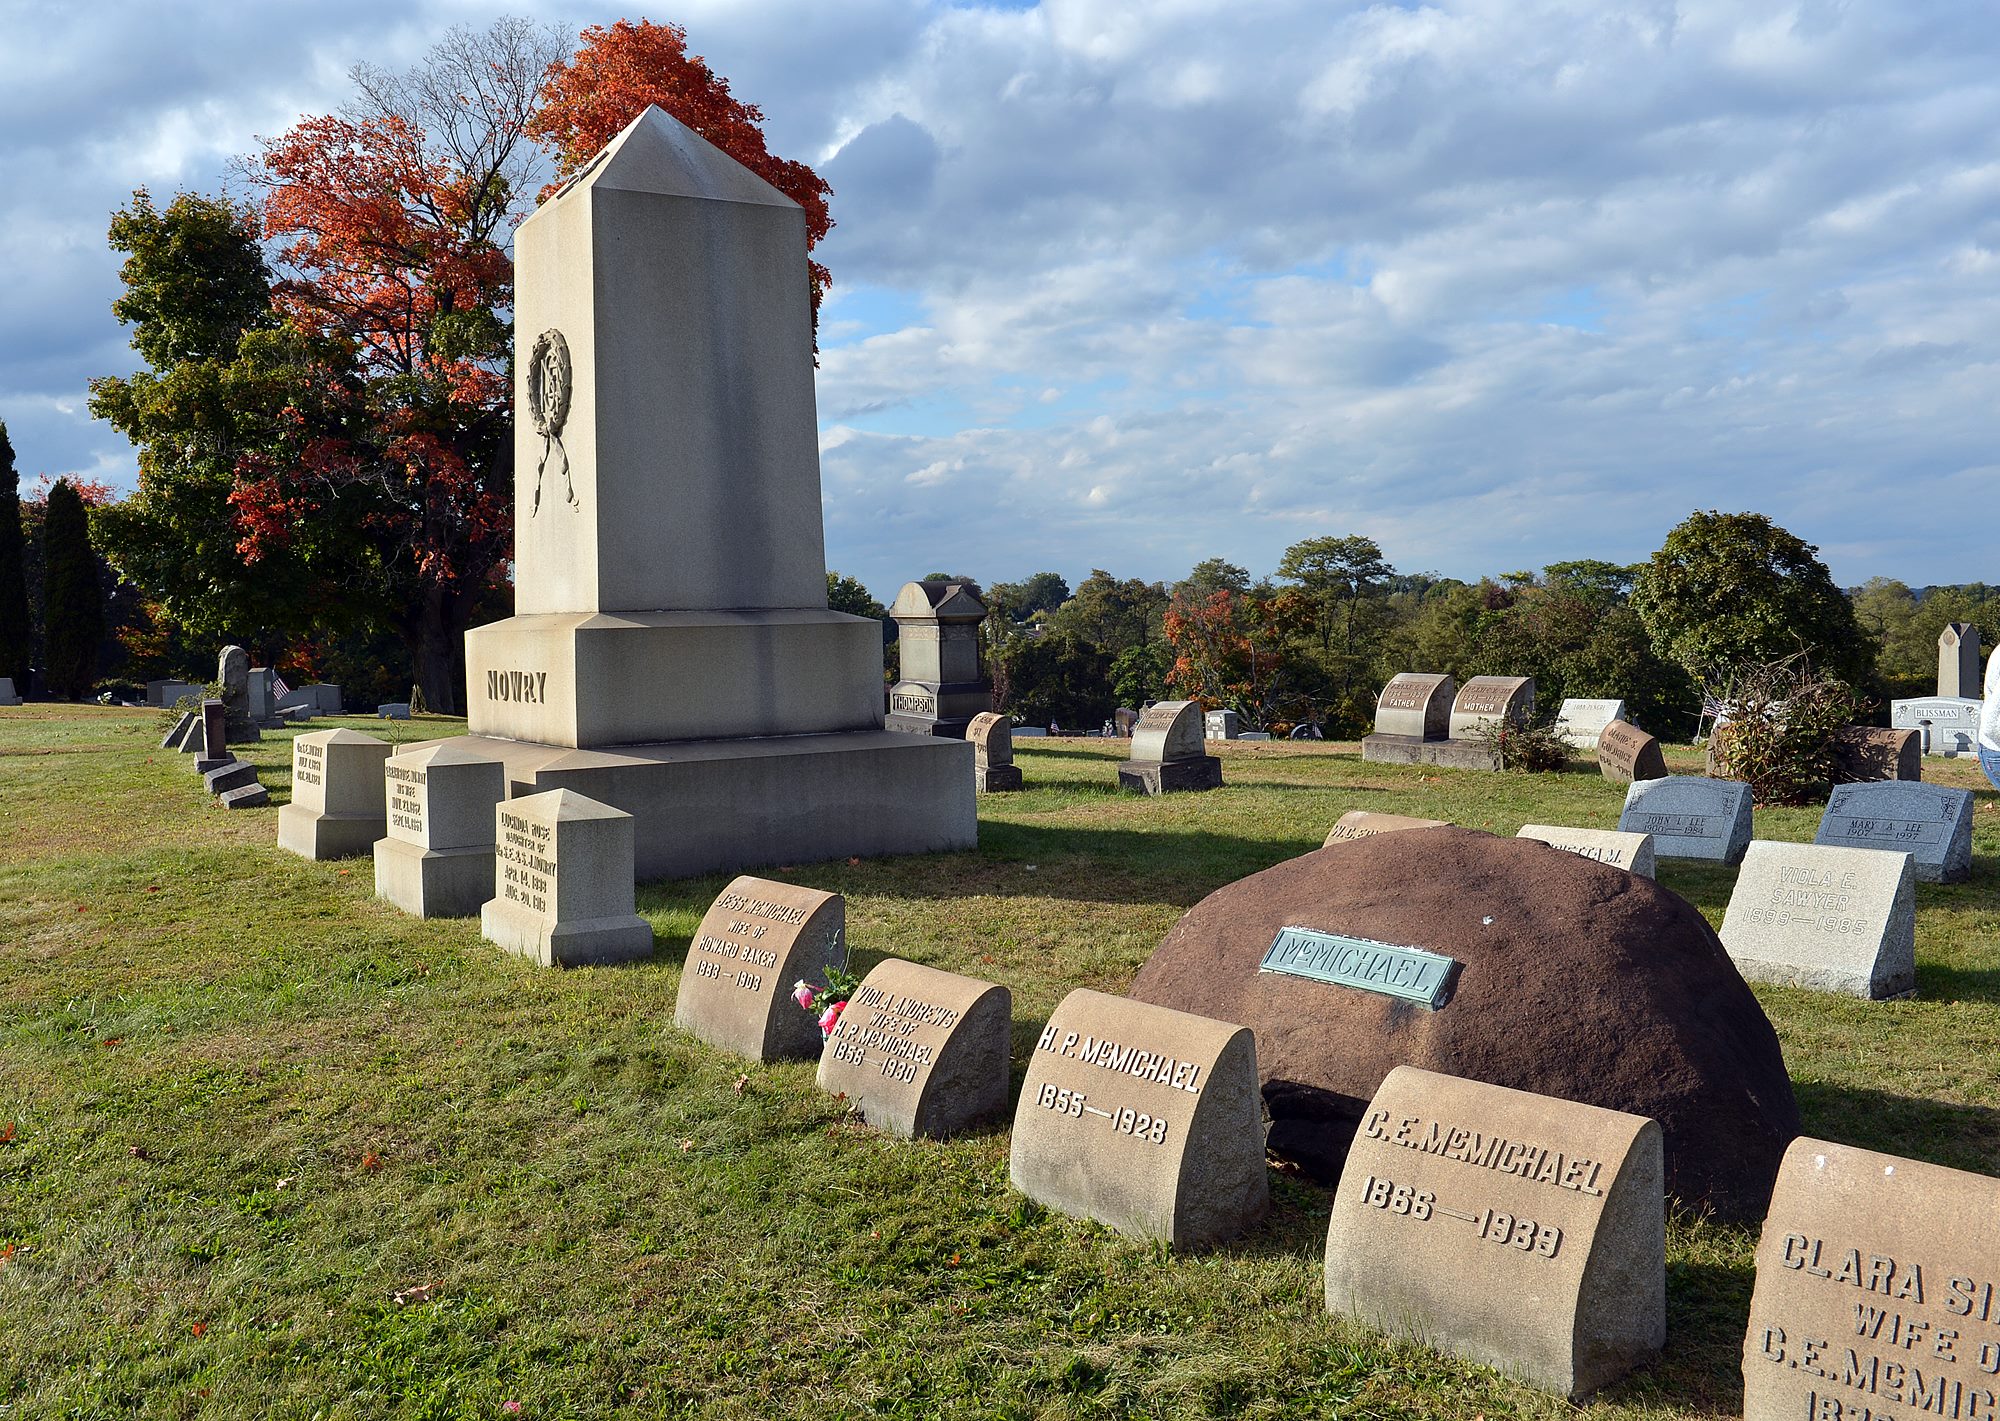 grandview cemetery